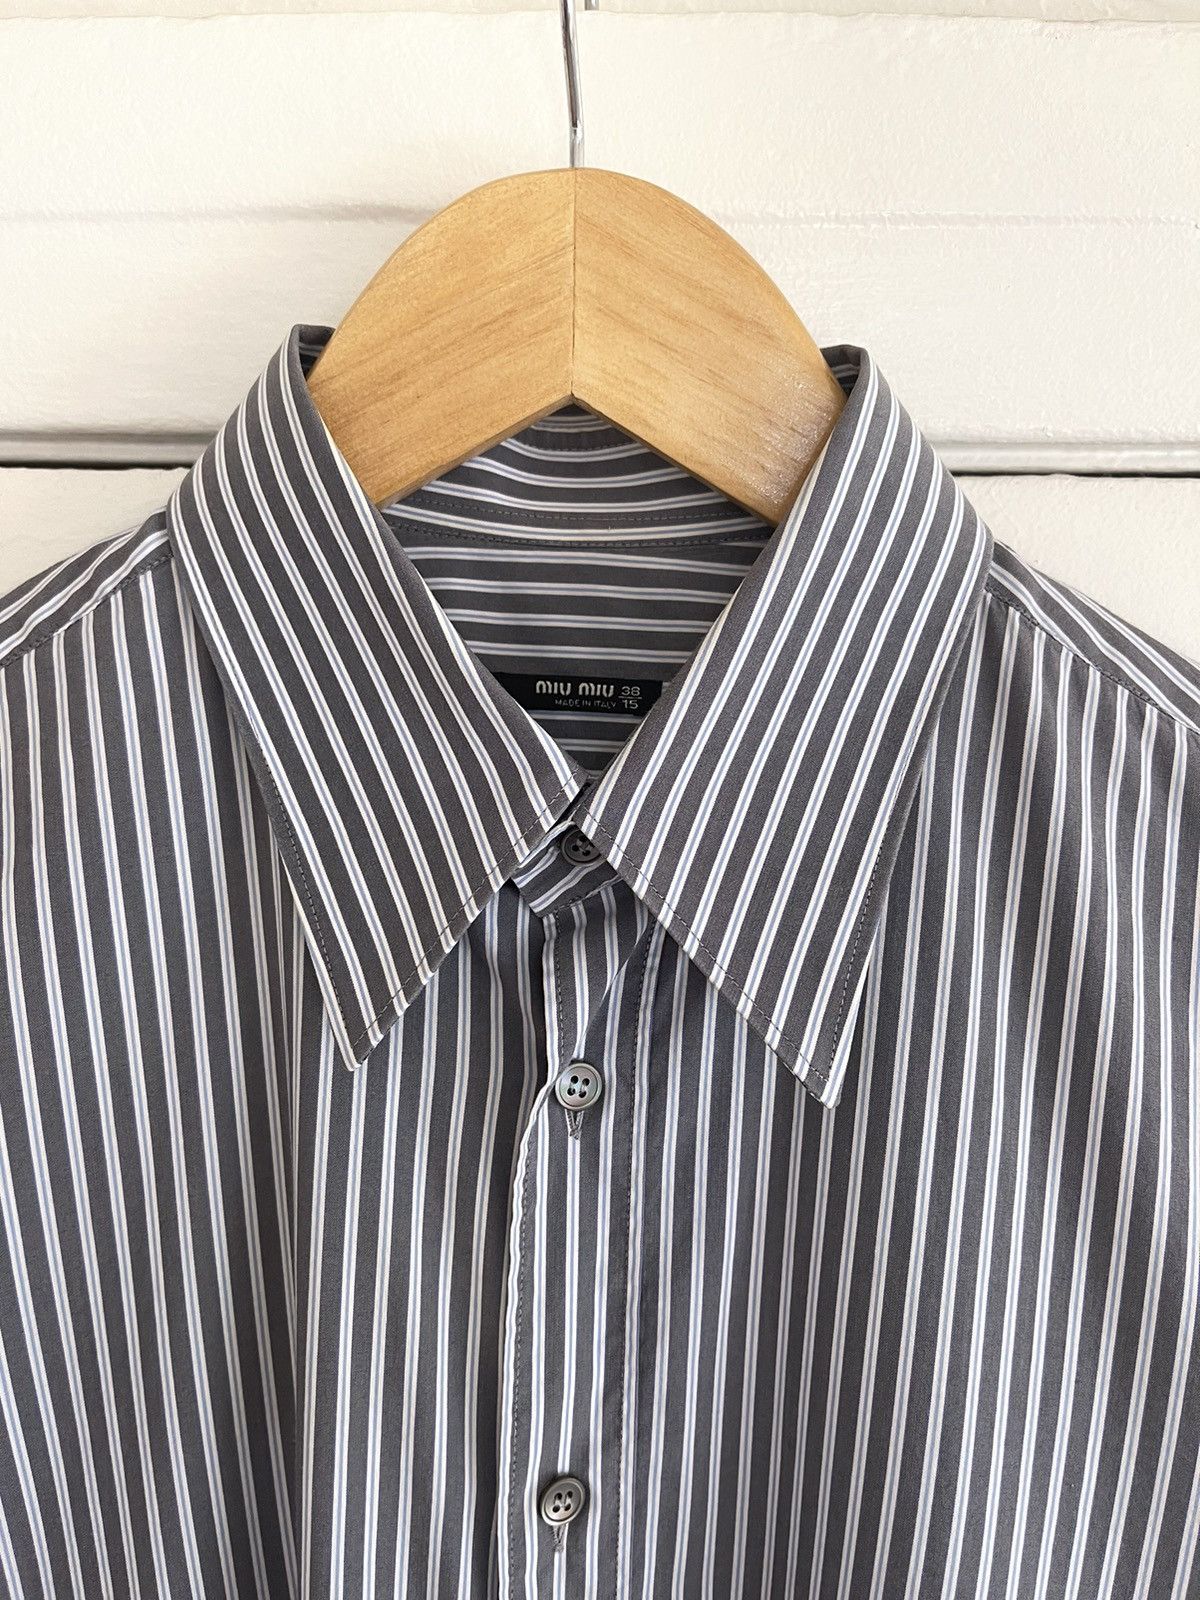 Miu Miu Miu Miu Grey/White/Blue Stripe Button-up Shirt Size XS / US 0-2 / IT 36-38 - 2 Preview